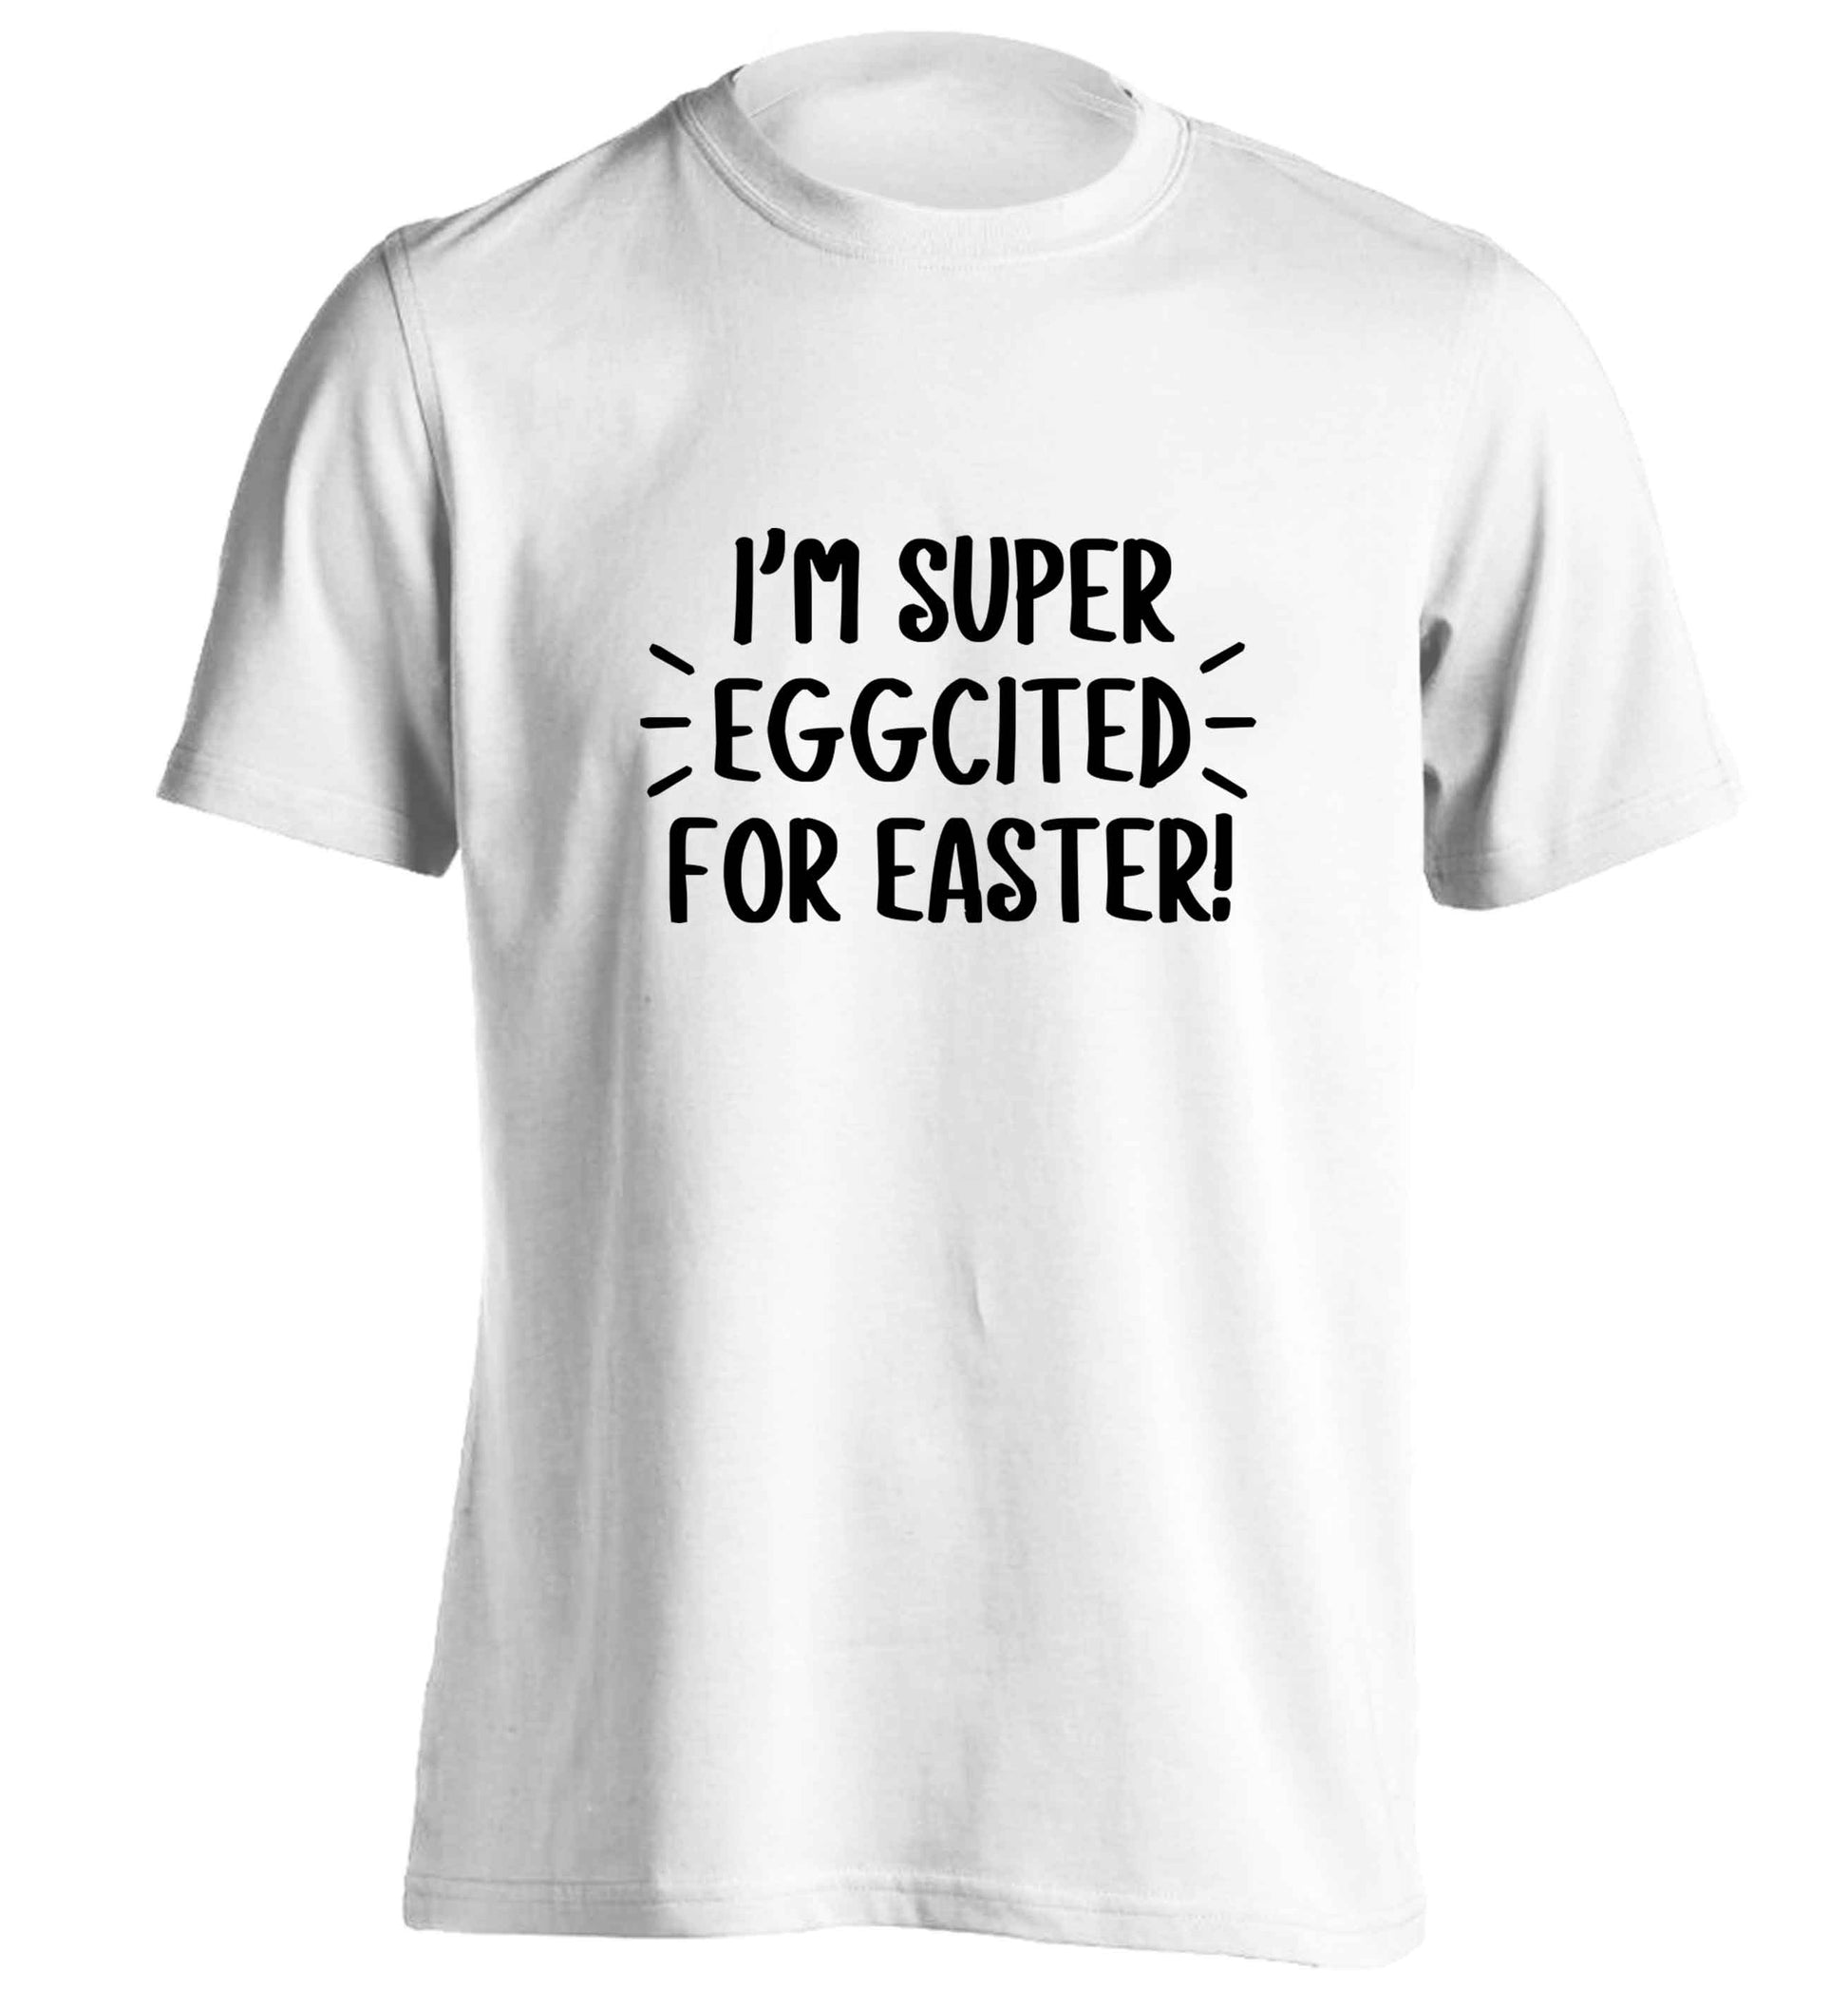 I'm super eggcited for Easter adults unisex white Tshirt 2XL